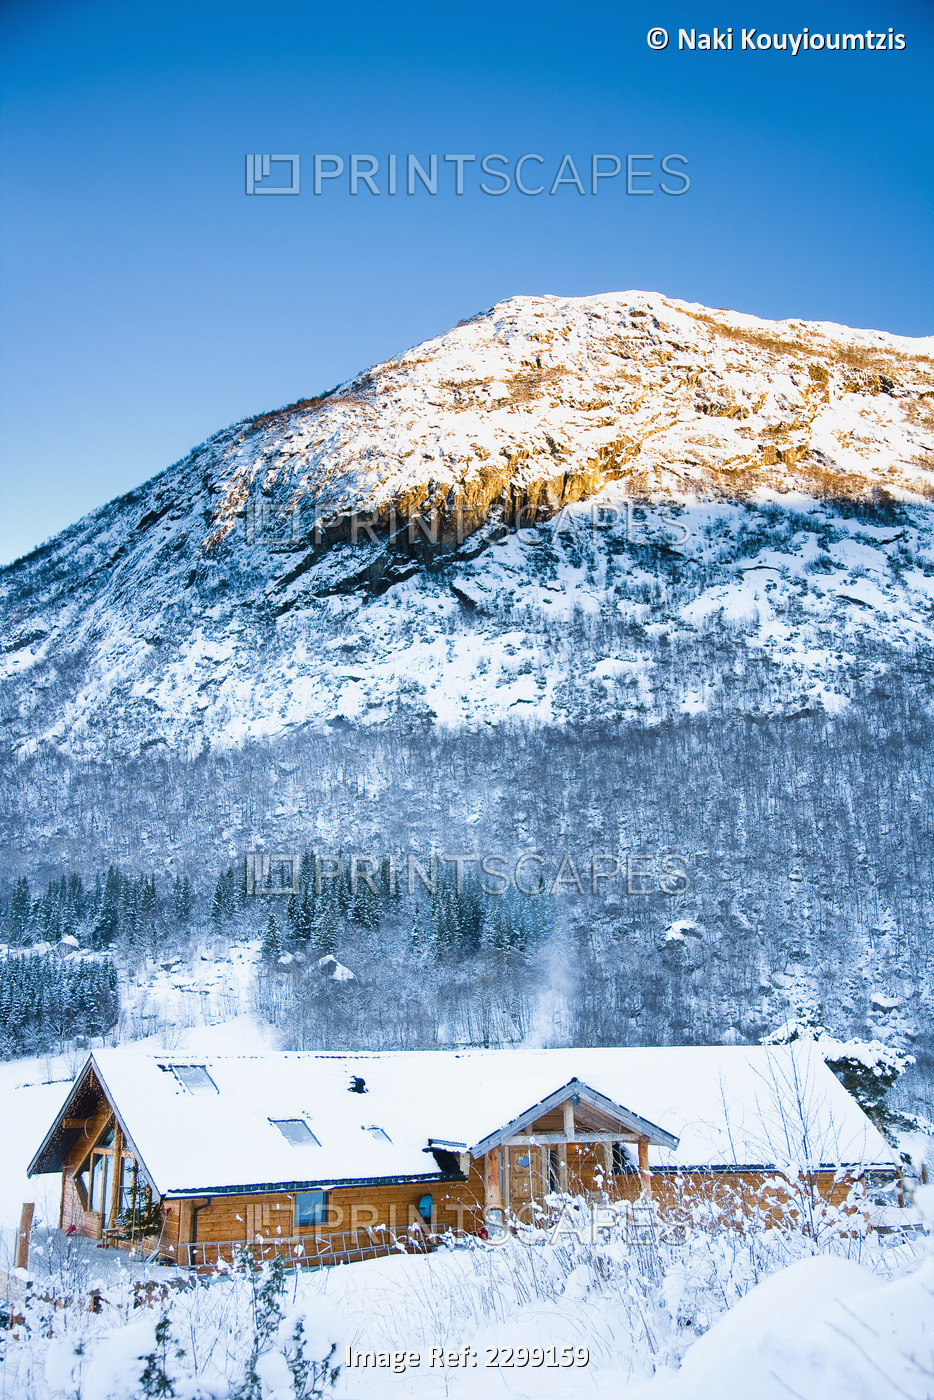 Norway, Sognefjord, winter wonderland; Ortnevik, Alpine Log cabin in snow, Pine ...